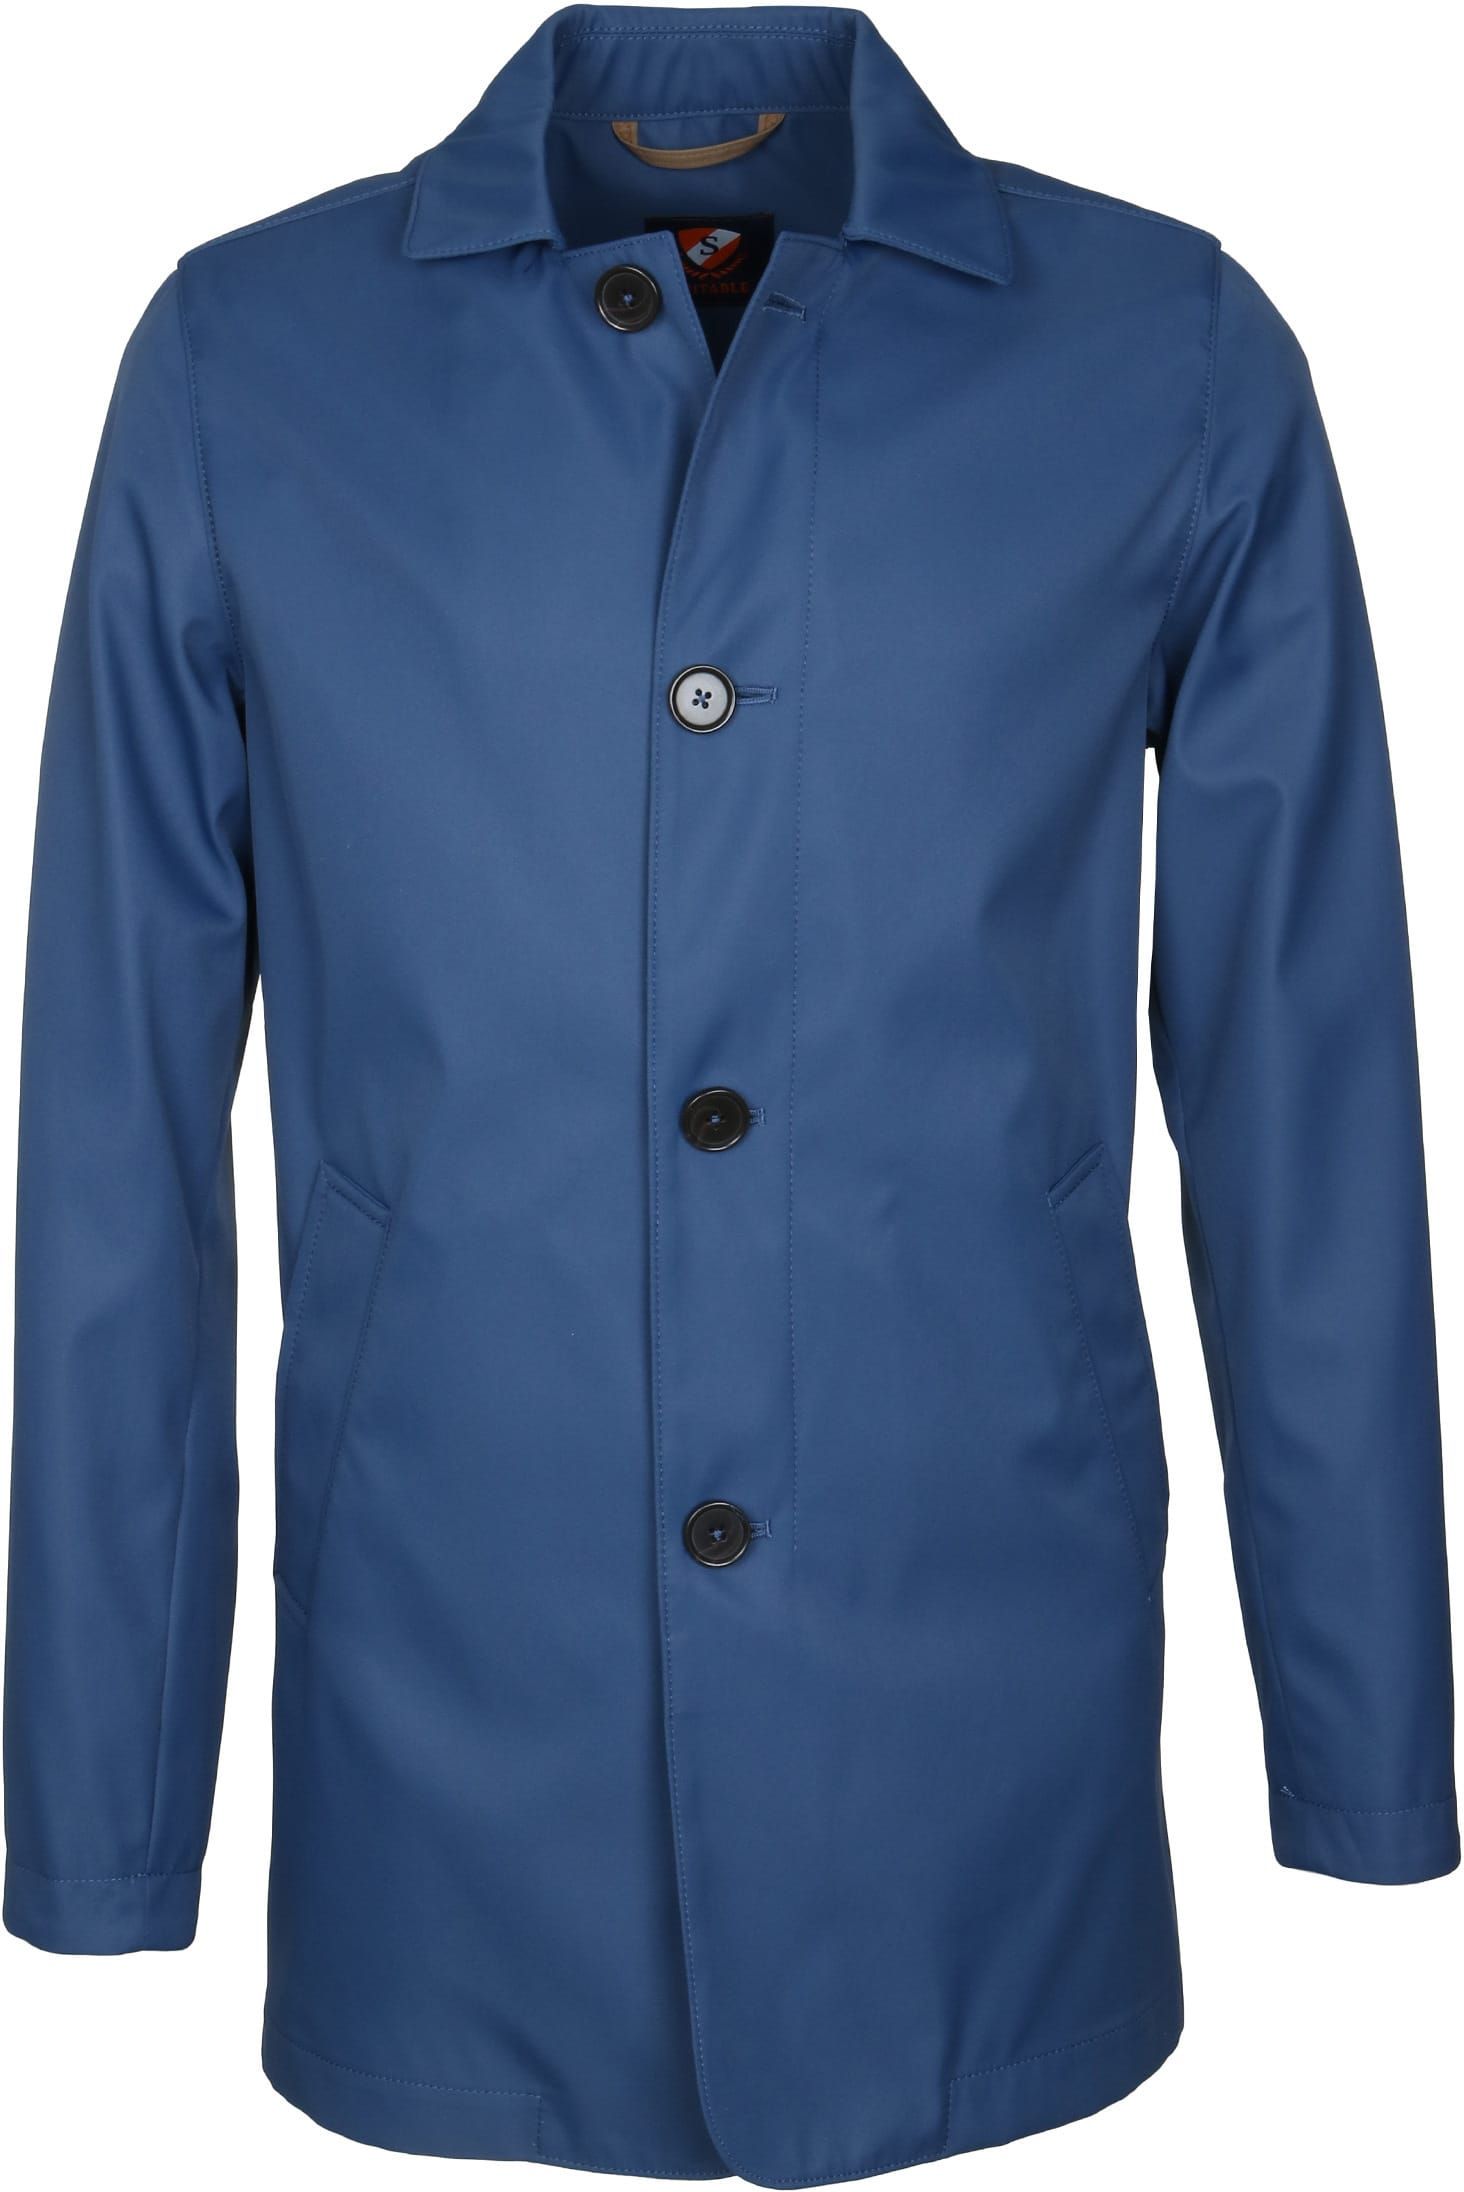 Suitable Coat Richard Indigo Blue size 38-R